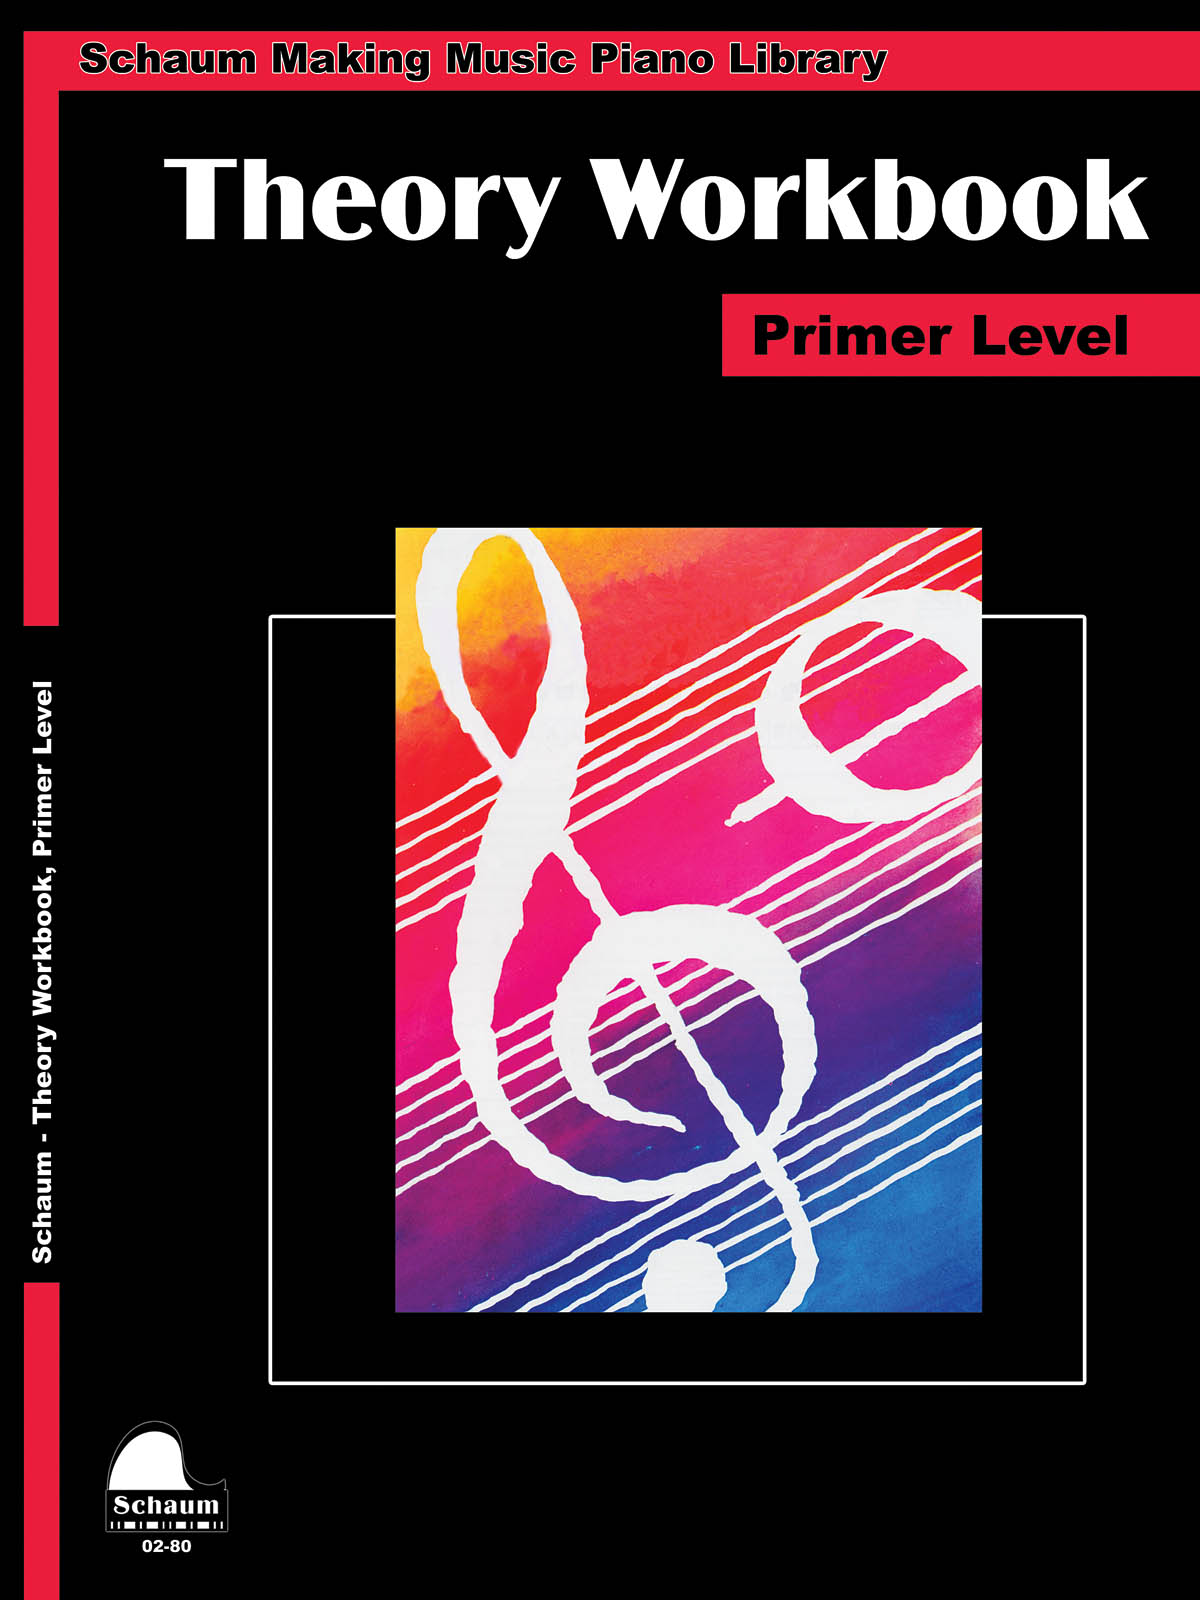 Theory Workbook - Primer - Schaum Making Music Piano Library